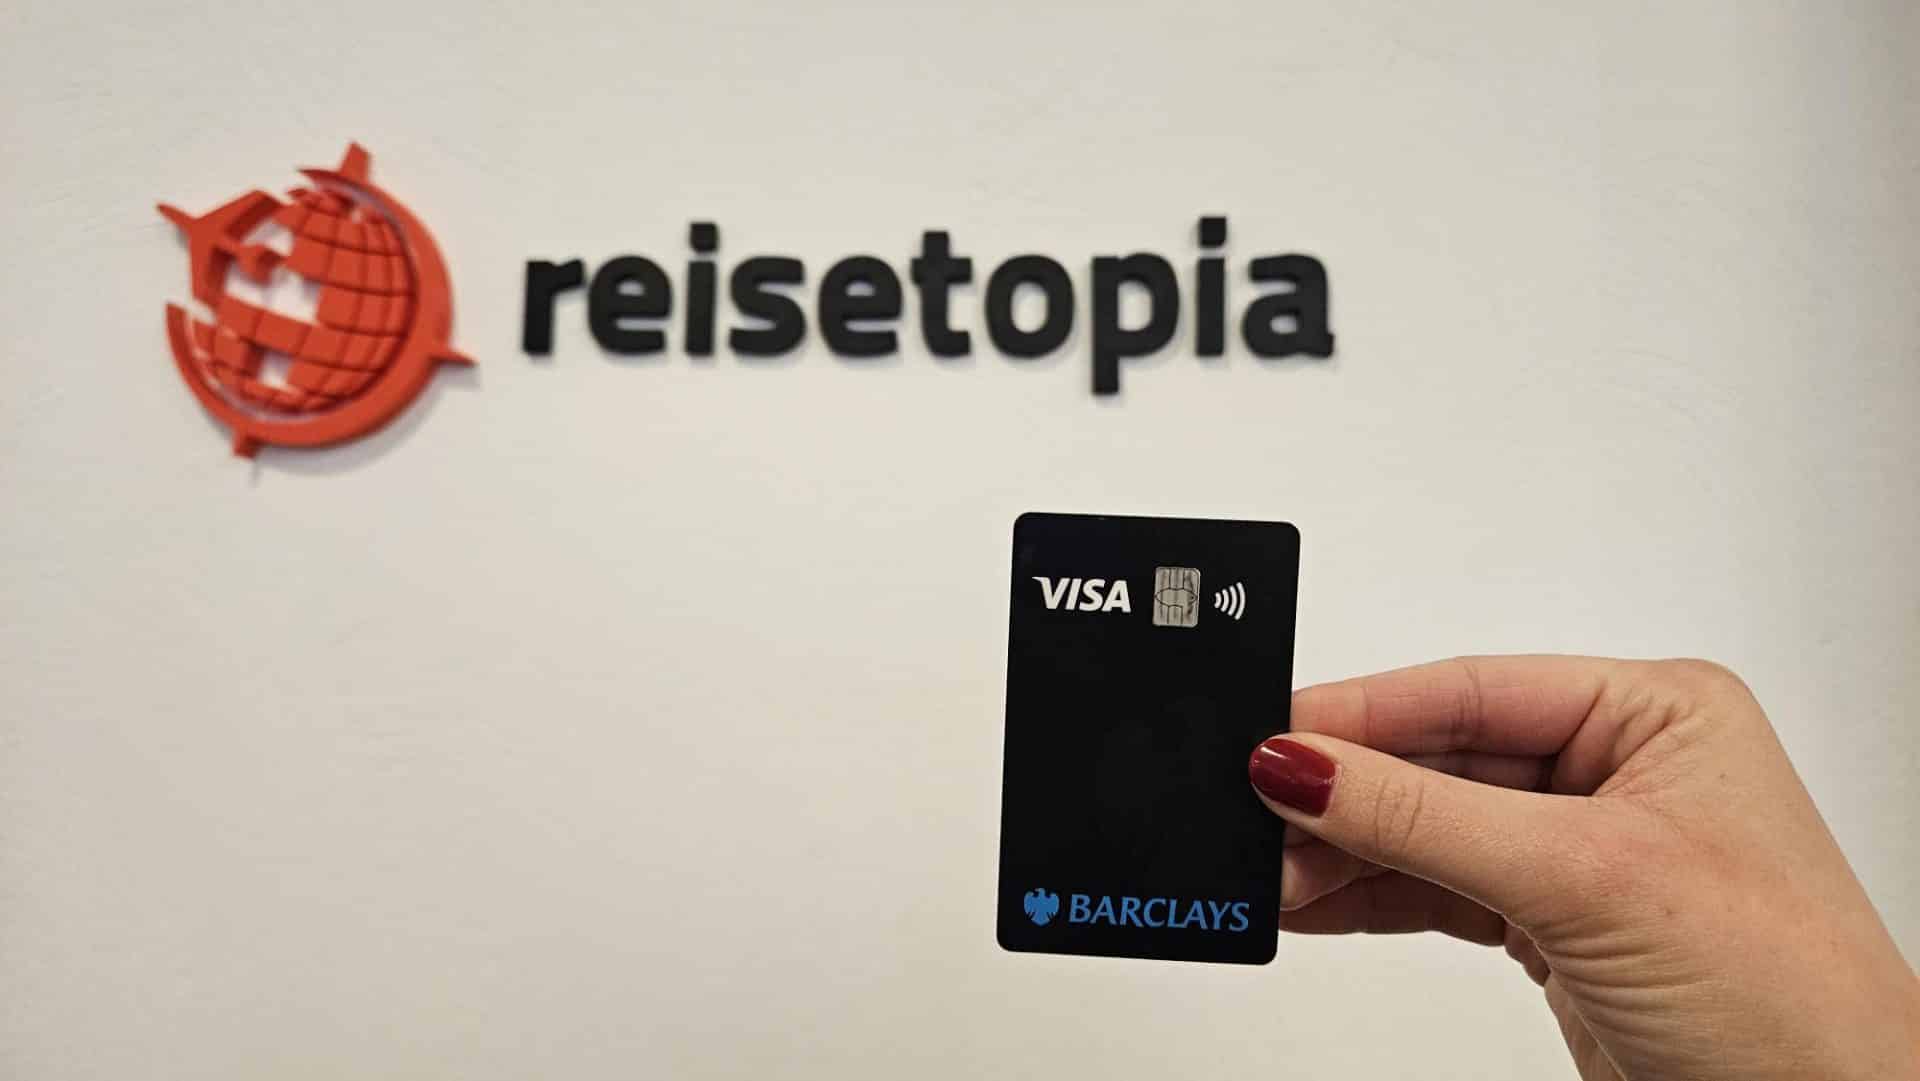 Barclays Visa Reisetopia